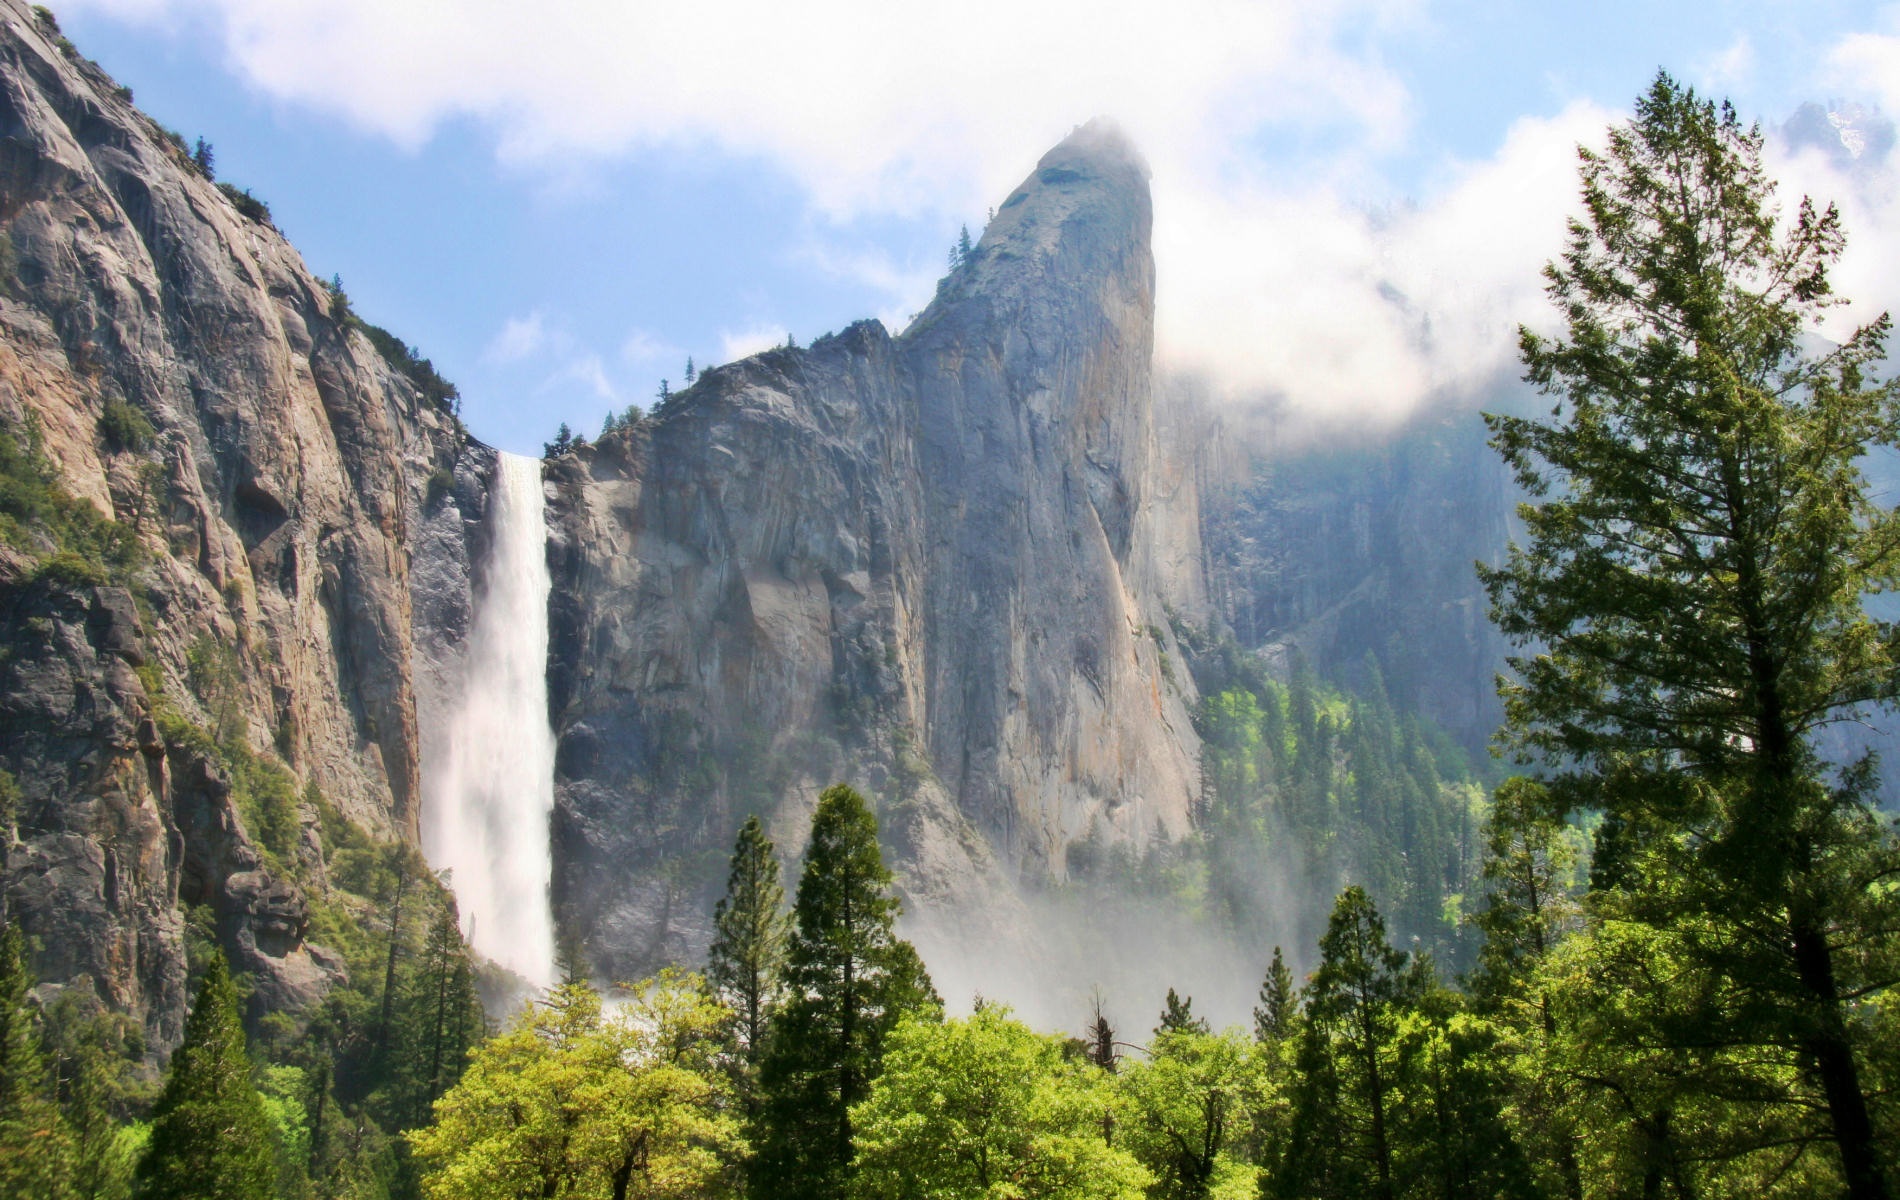 Yosemite Wallpapers Hd Pixelstalk
get The Default Os - Yosemite National Park, Bridalveil Fall - HD Wallpaper 